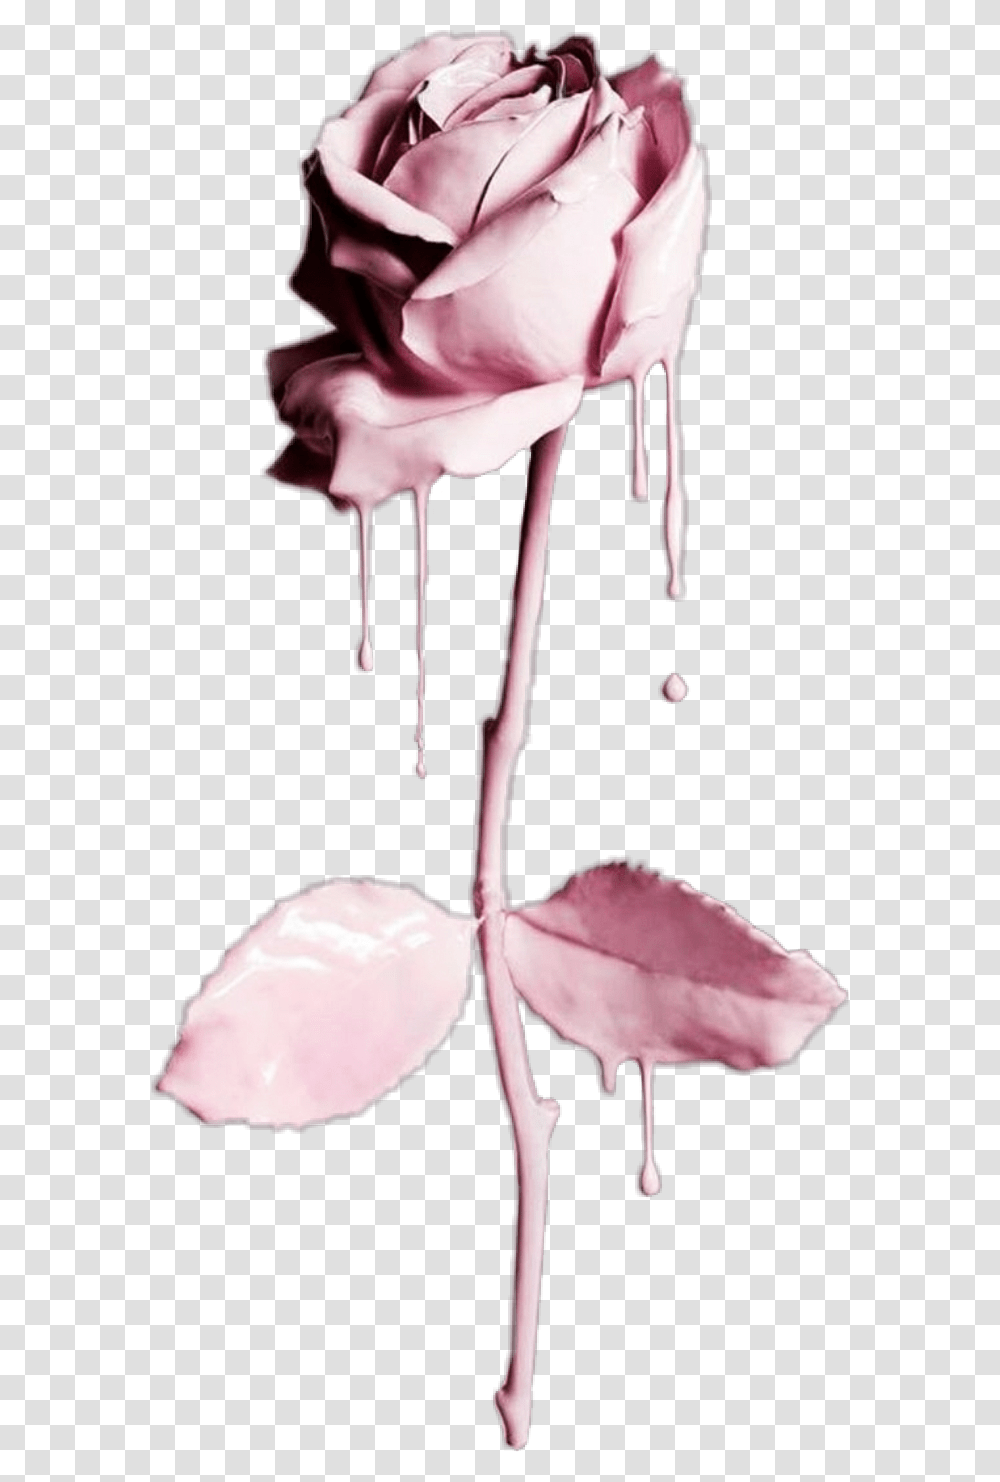 Flower Flowers Rose Liquid Drip Dripping Water Flowers Dripping With Water, Petal, Plant, Blossom Transparent Png